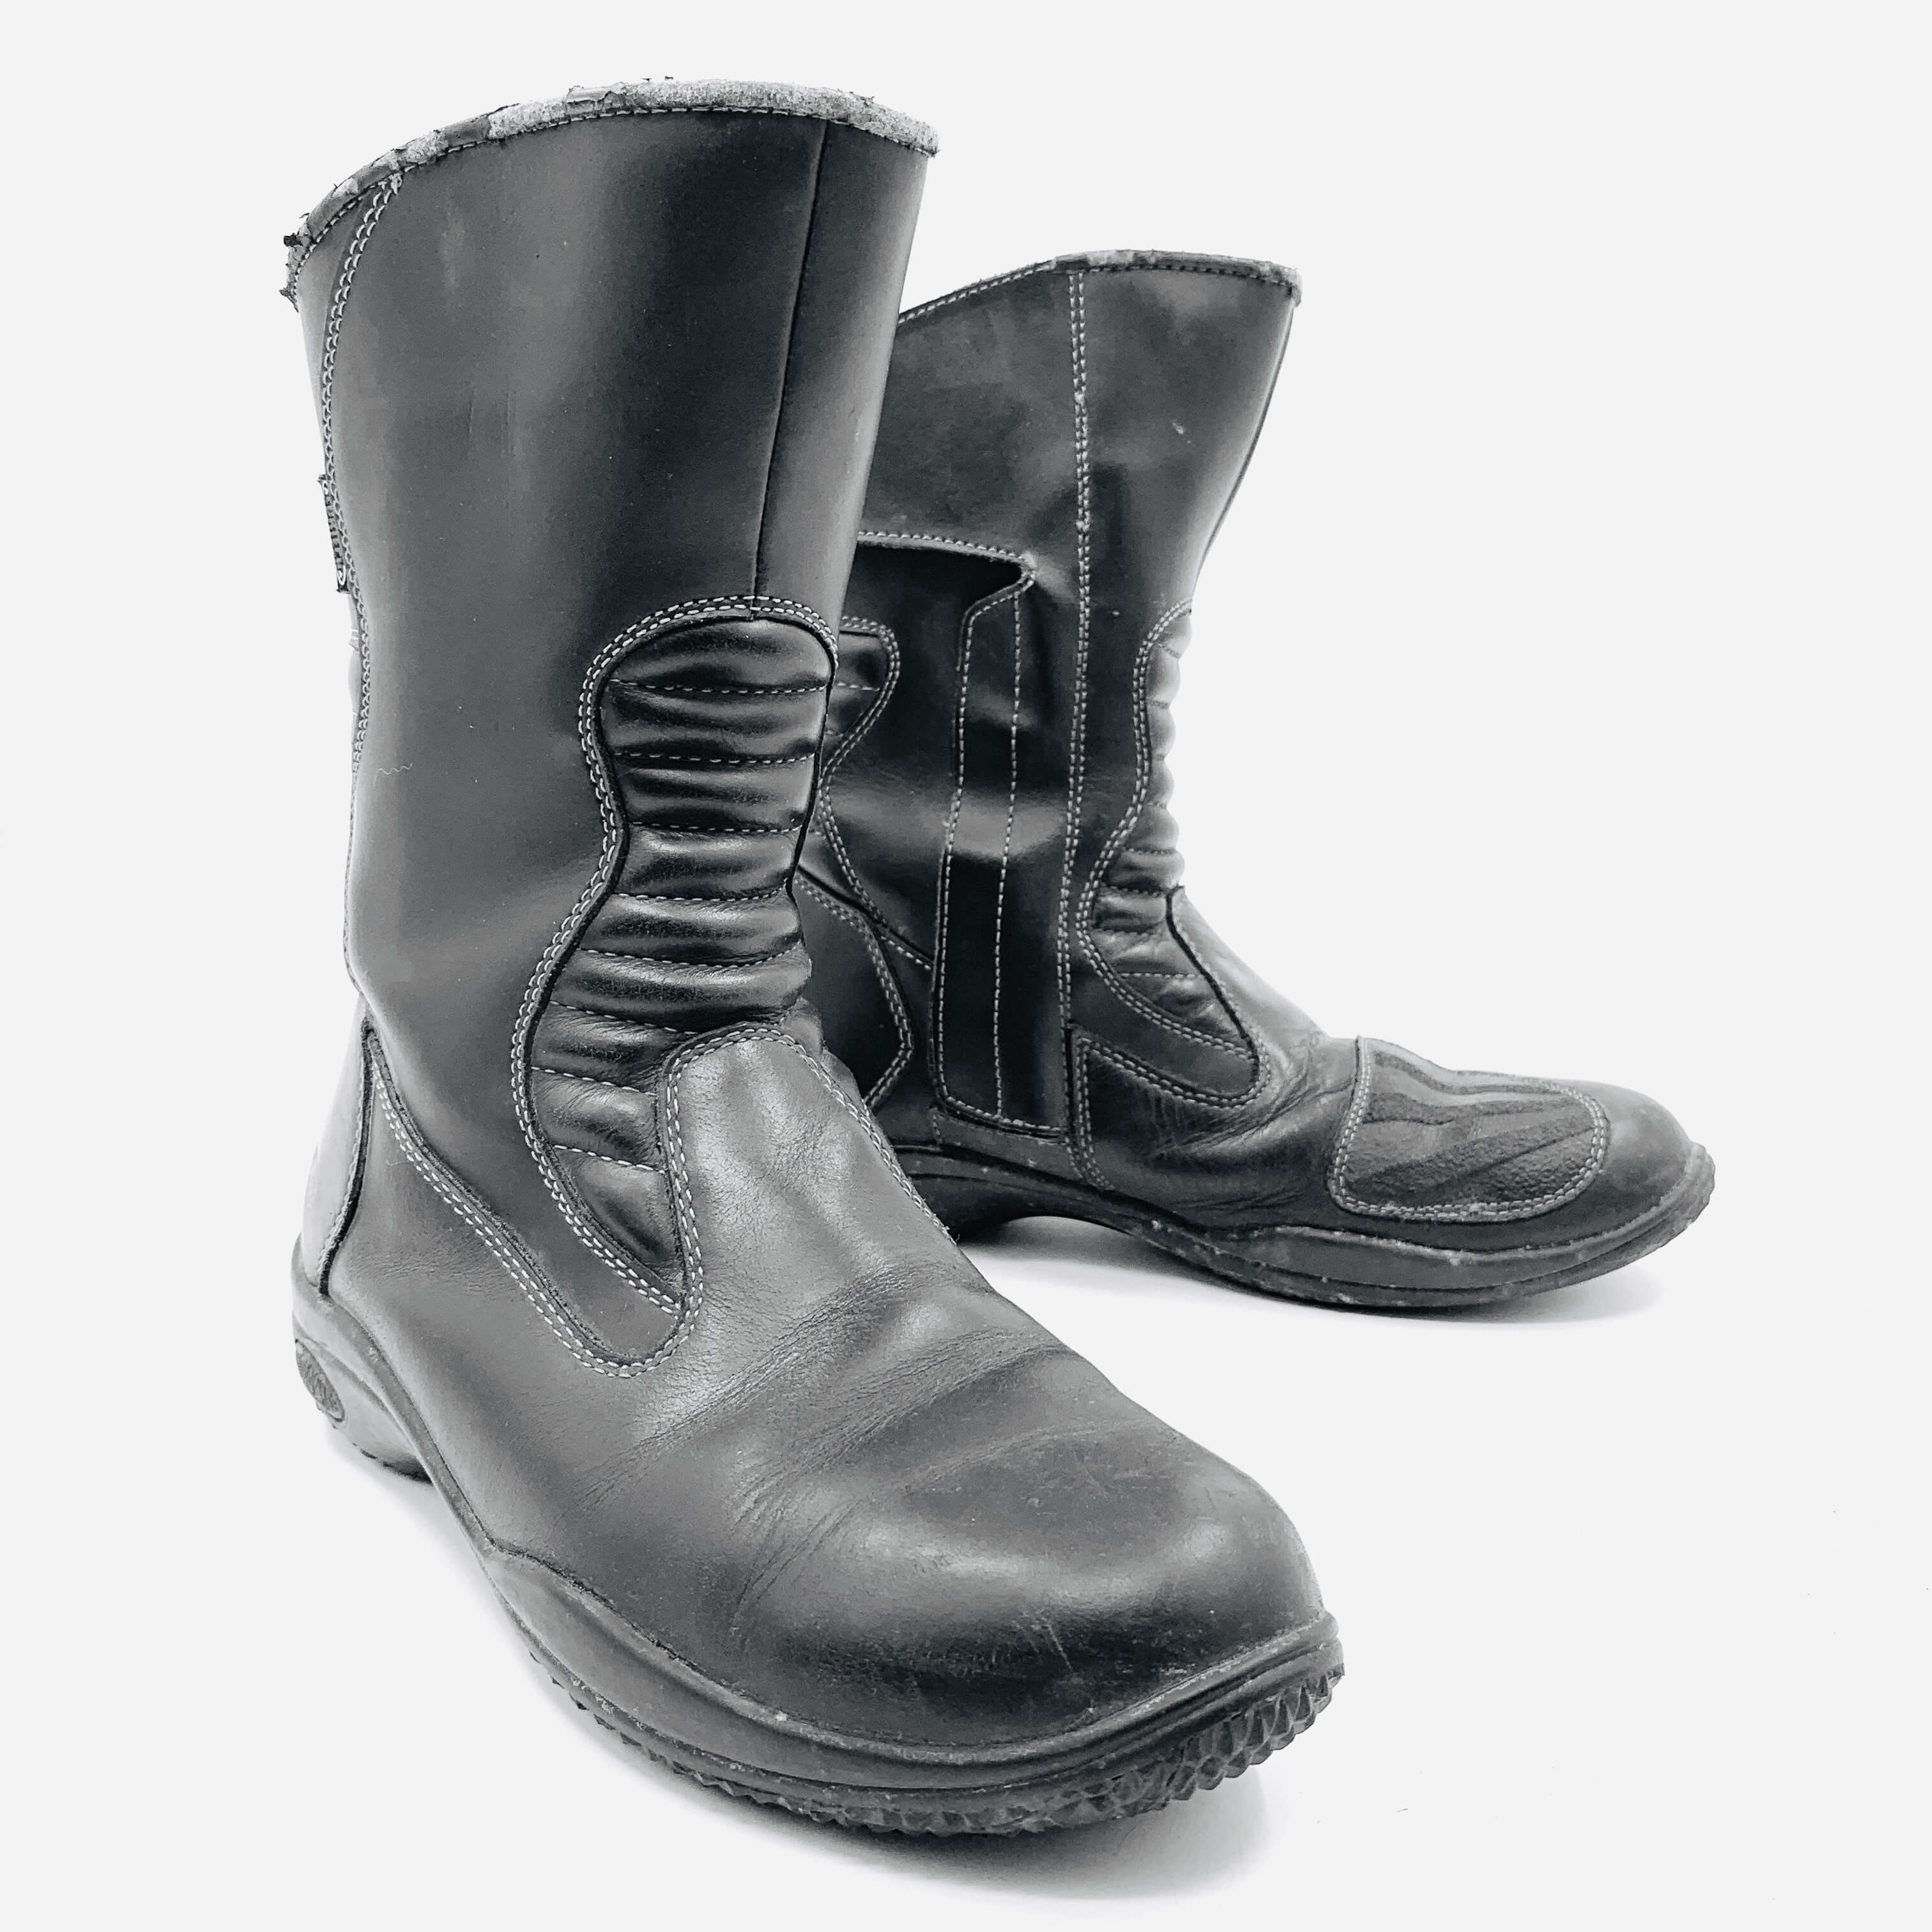 Cortech Solution Waterproof Road Motorcycle Boot Mens Size 8 | eBay